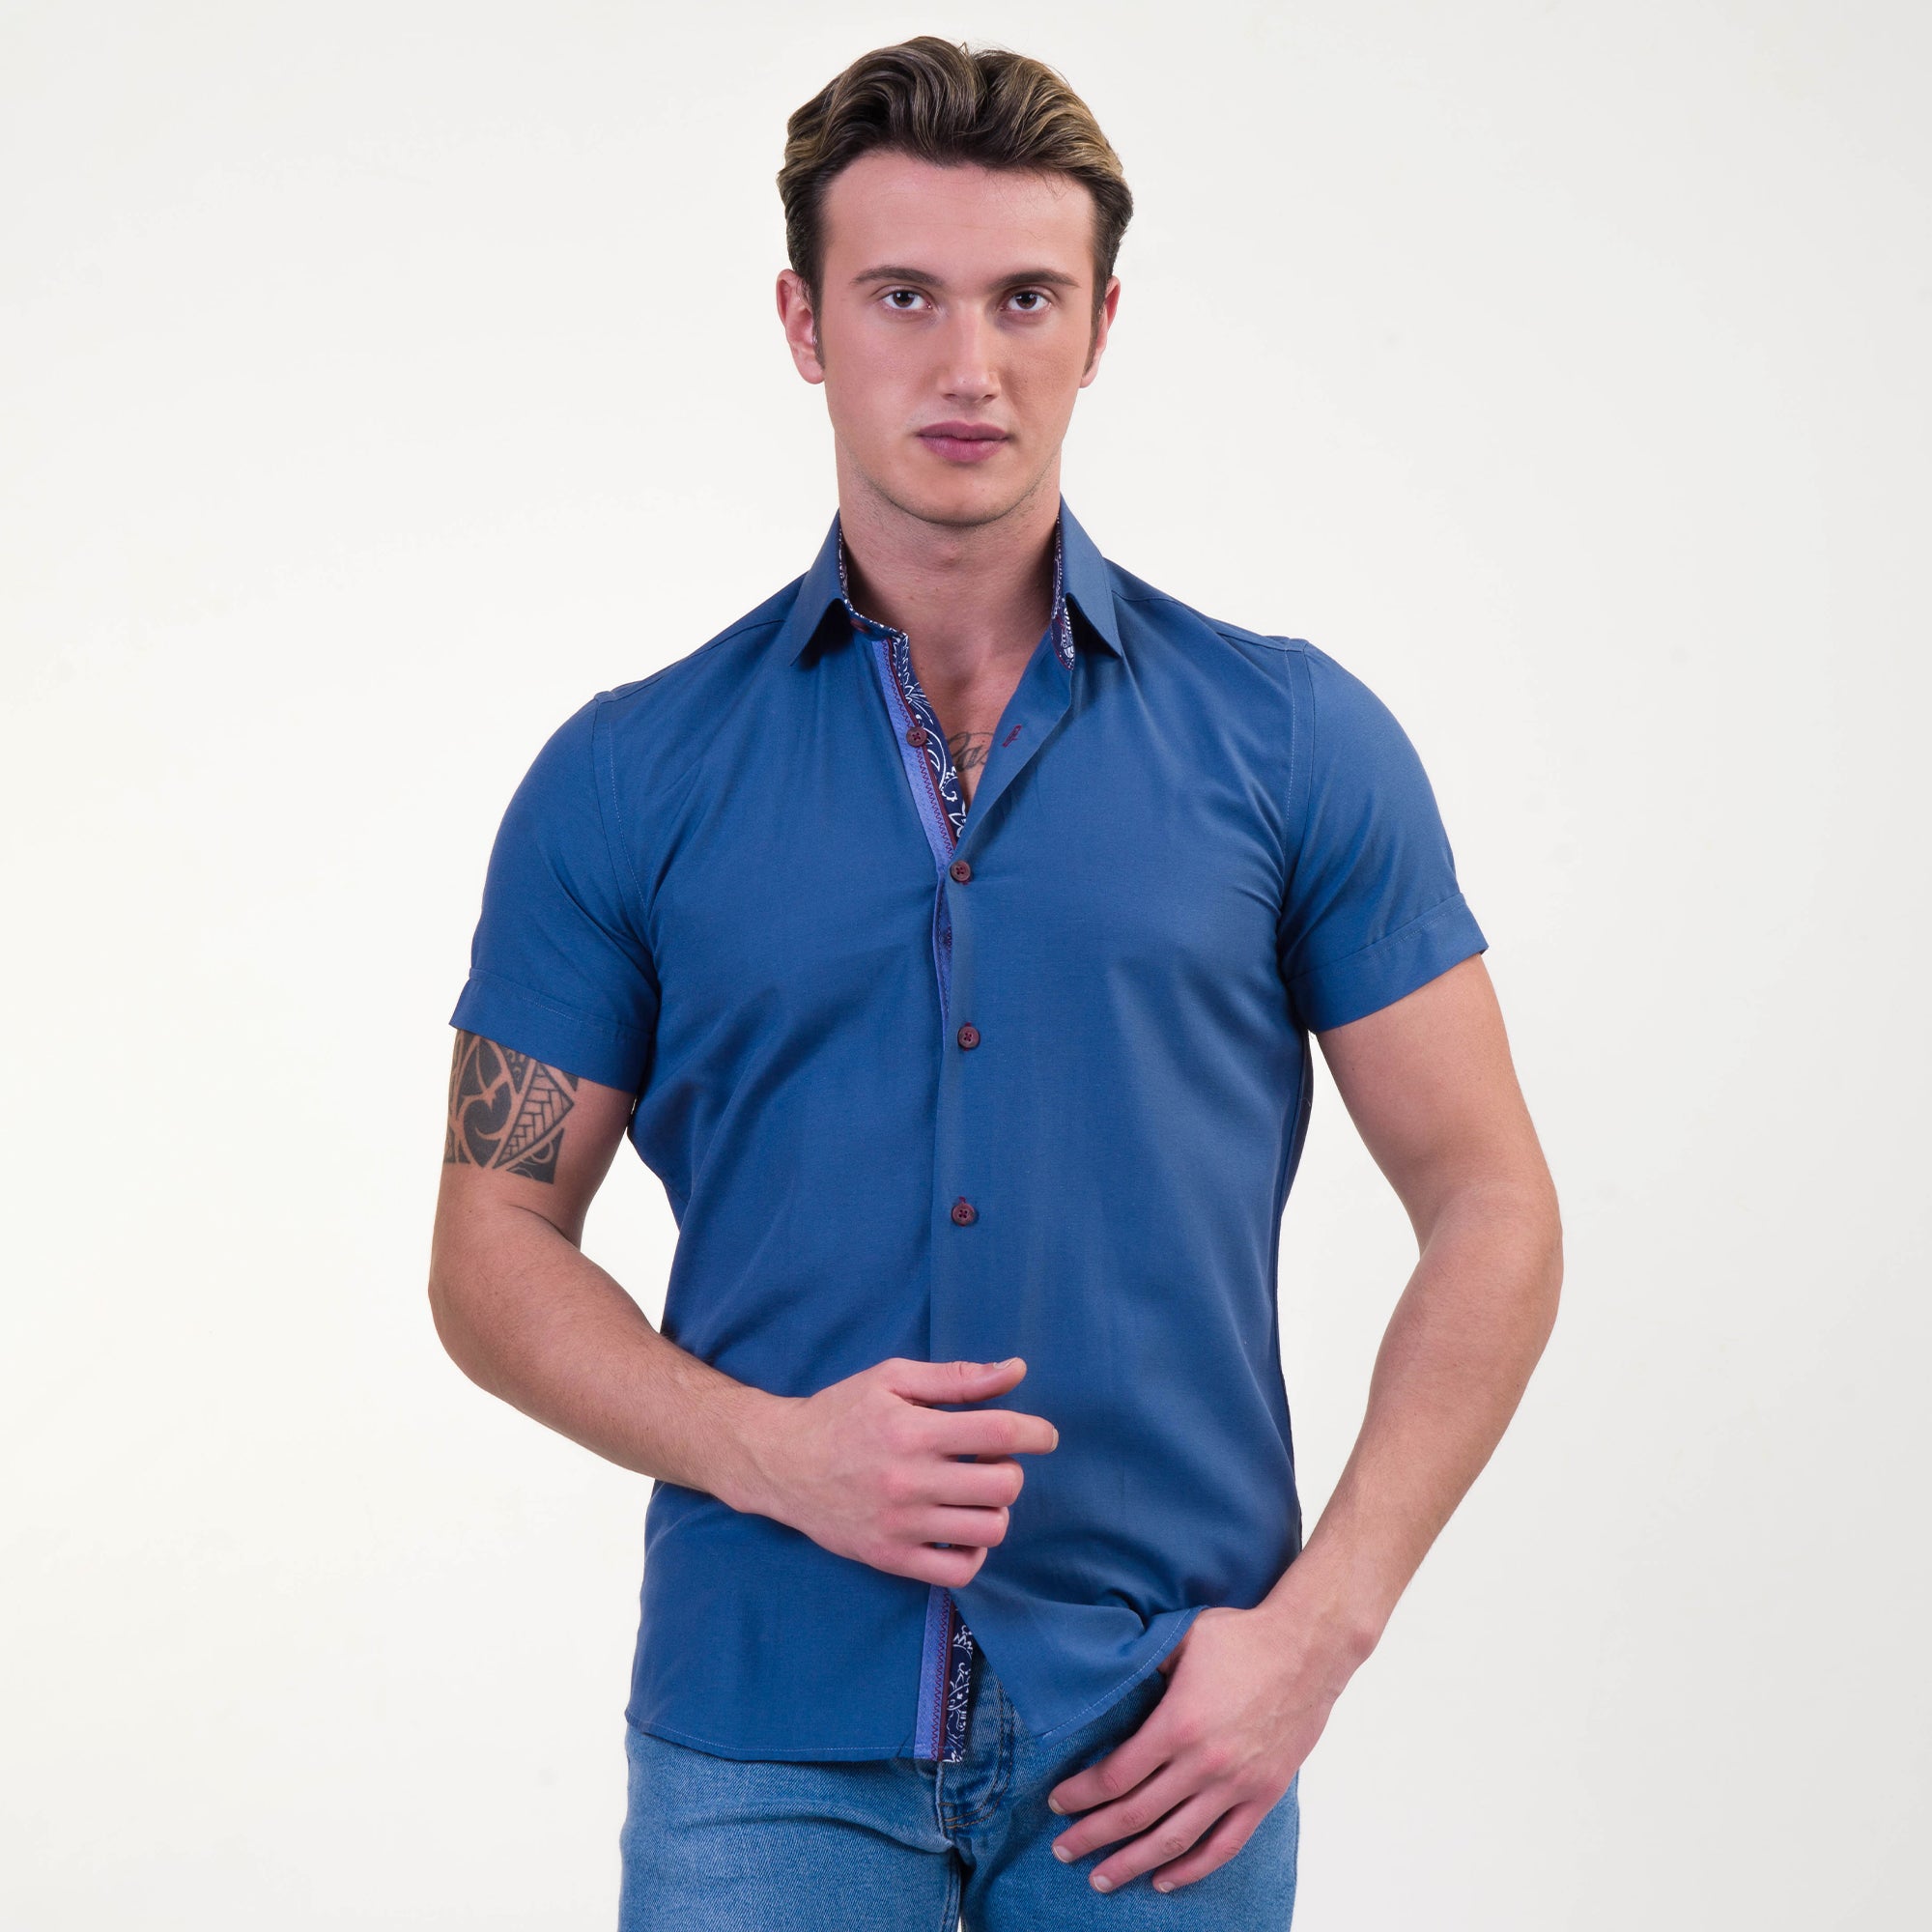 Rich Blue Mens Short Sleeve Button up Shirts - Tailored Slim Fit Cotton Dress Shirts